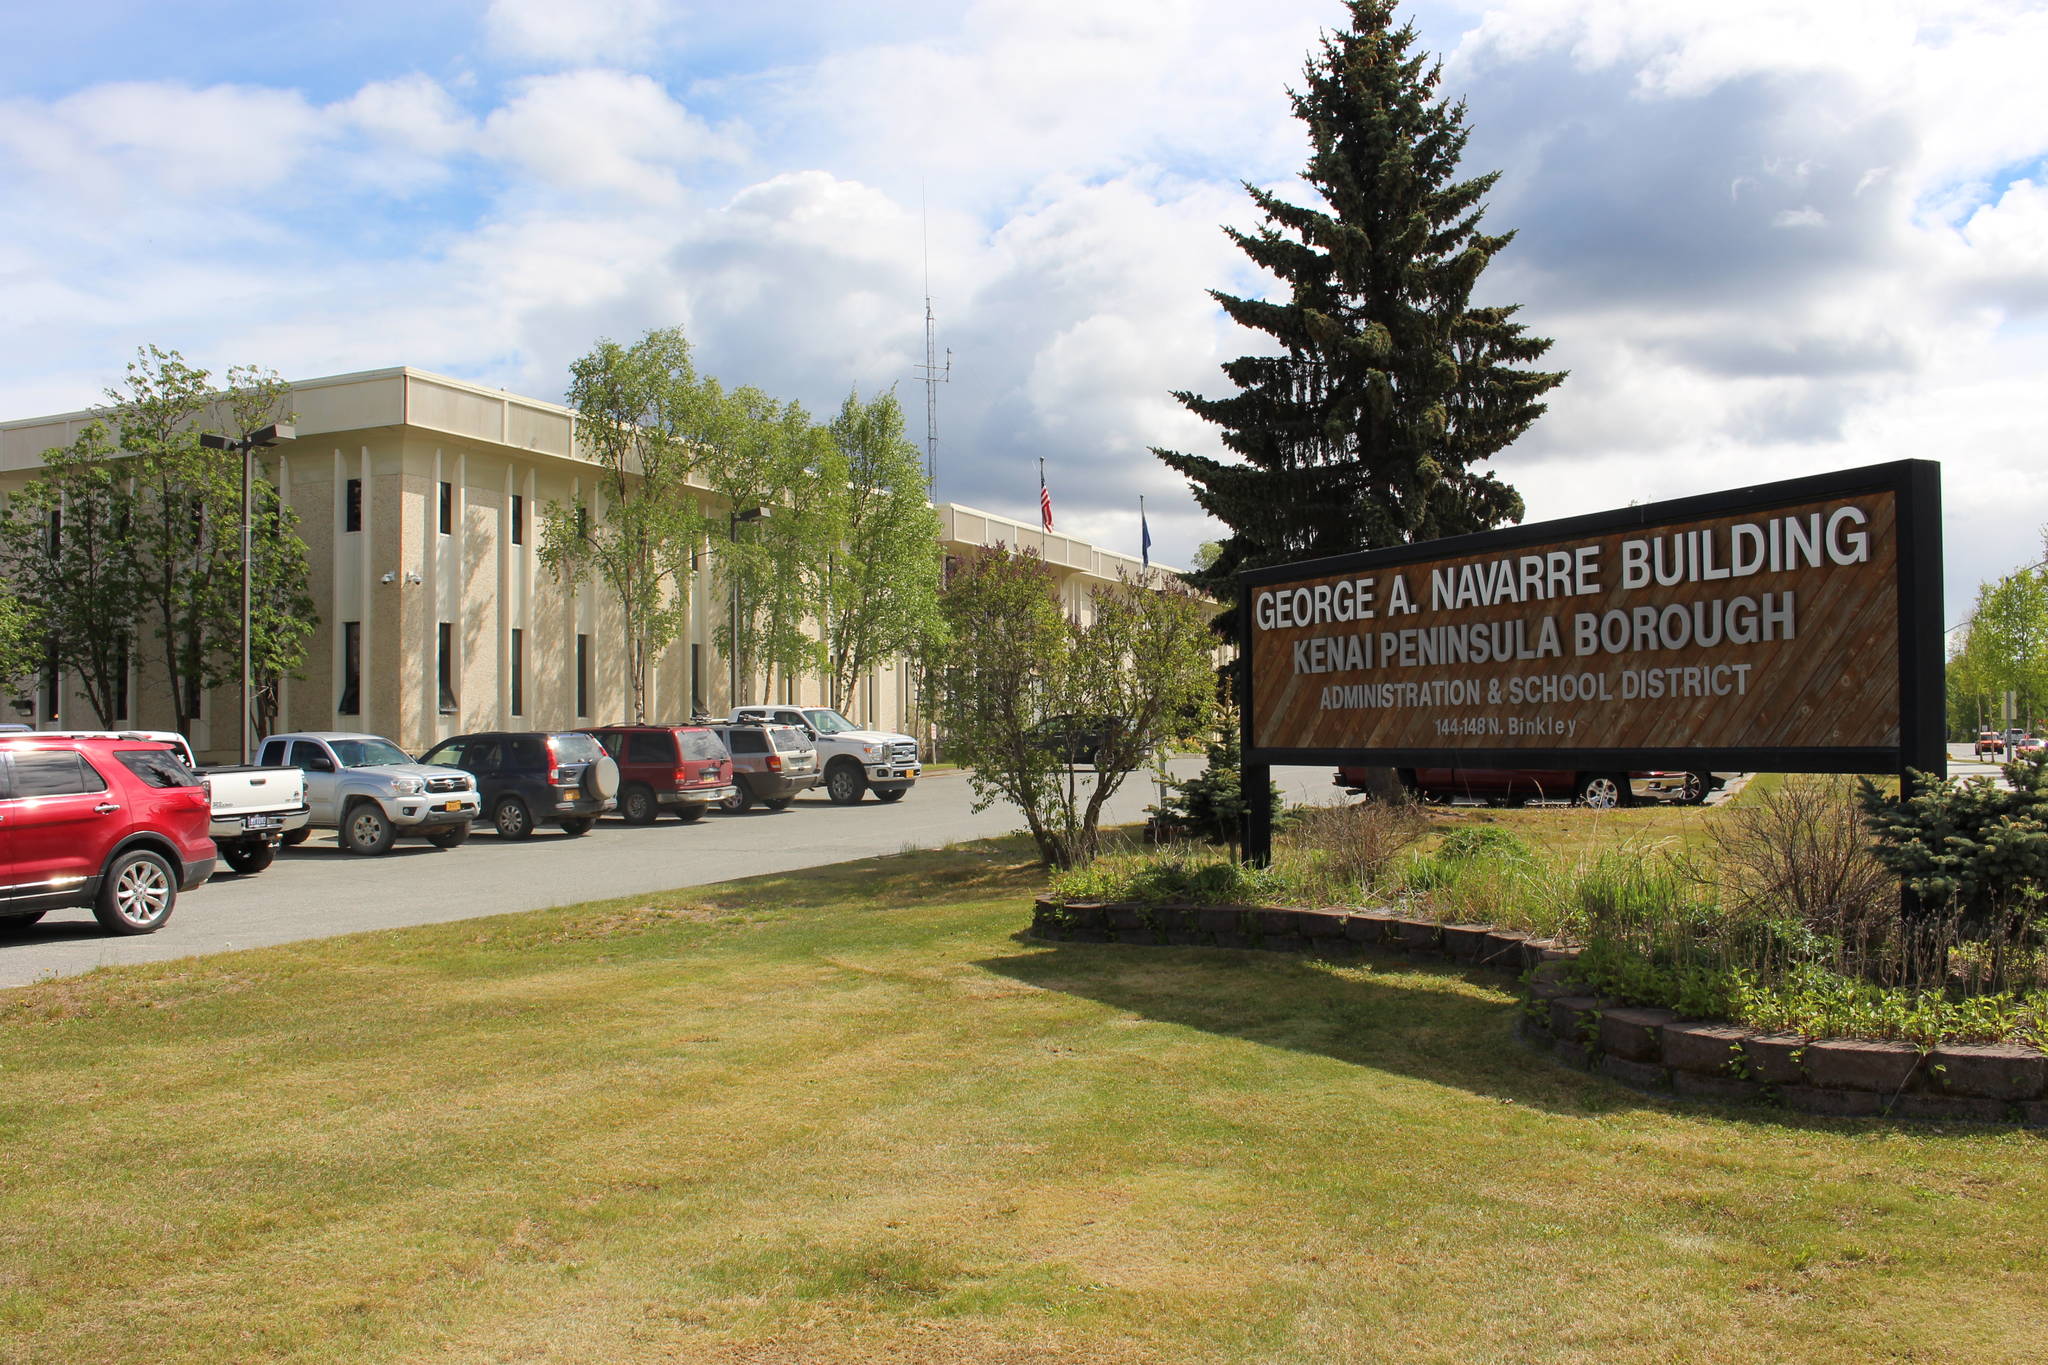 The entrance to the Kenai Peninsula Borough building in Soldotna, Alaska, is seen here on June 1, 2020. (Photo by Brian Mazurek/Peninsula Clarion)